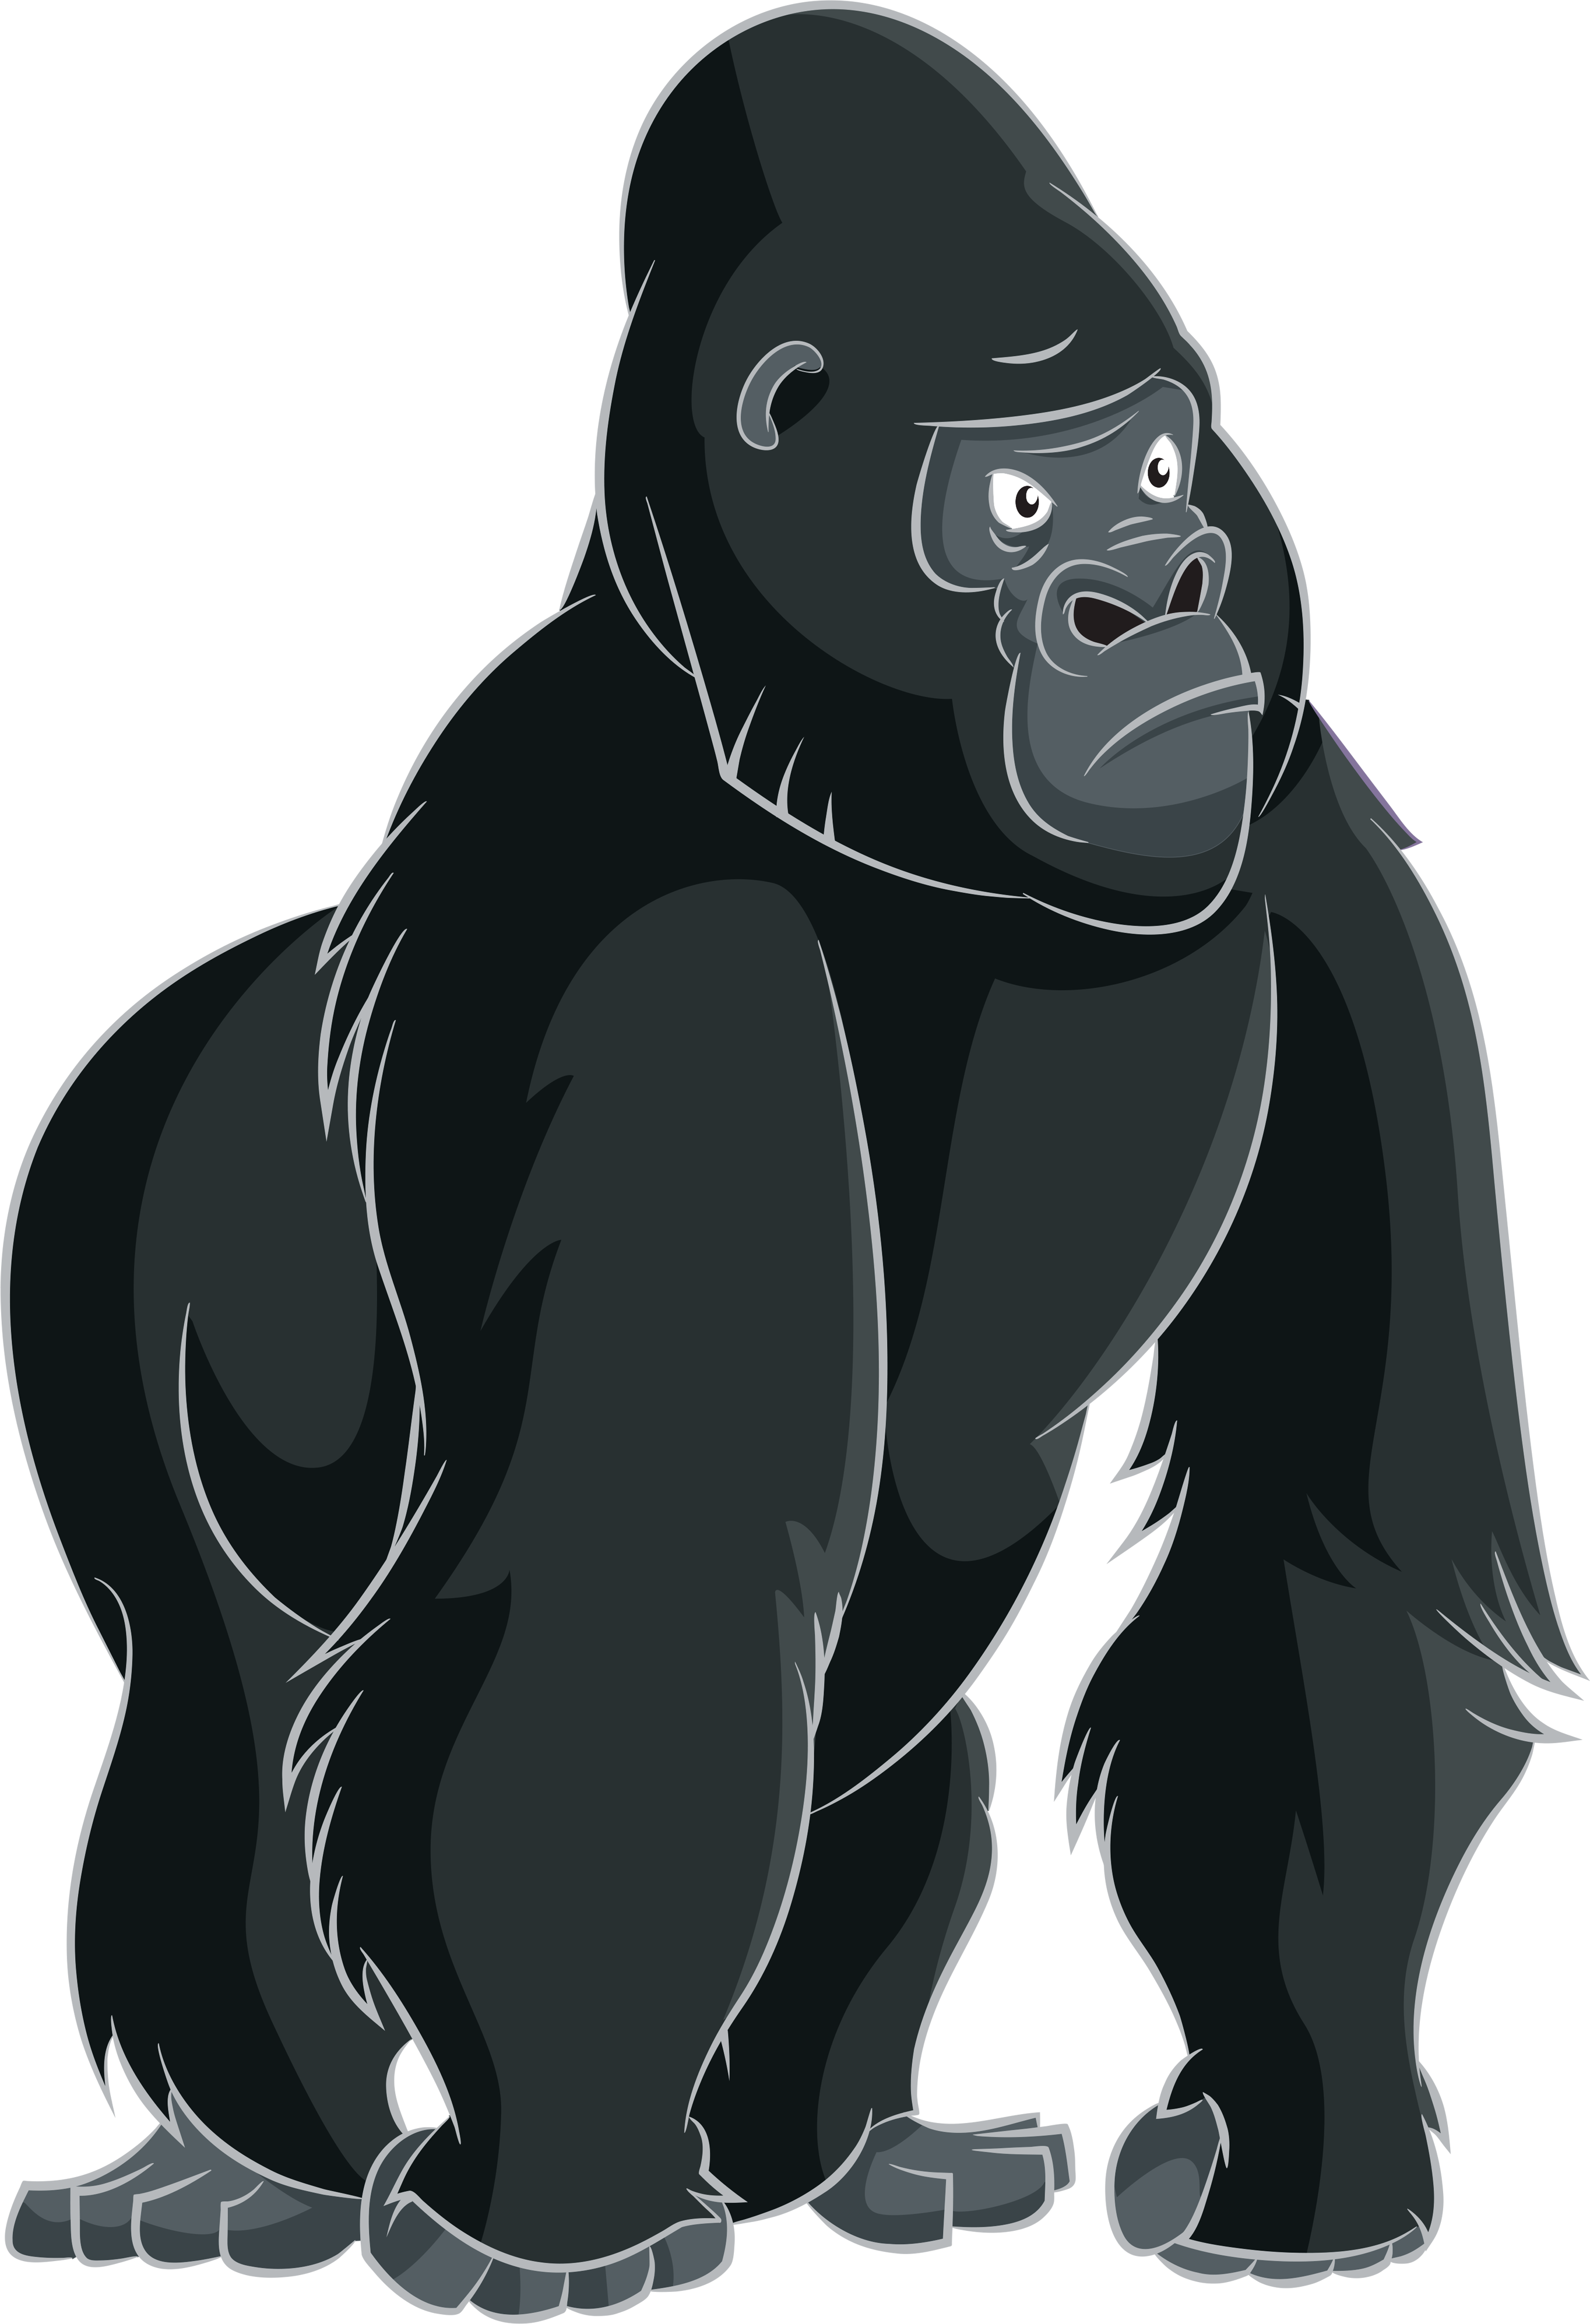 Gorilla ape cartoon.